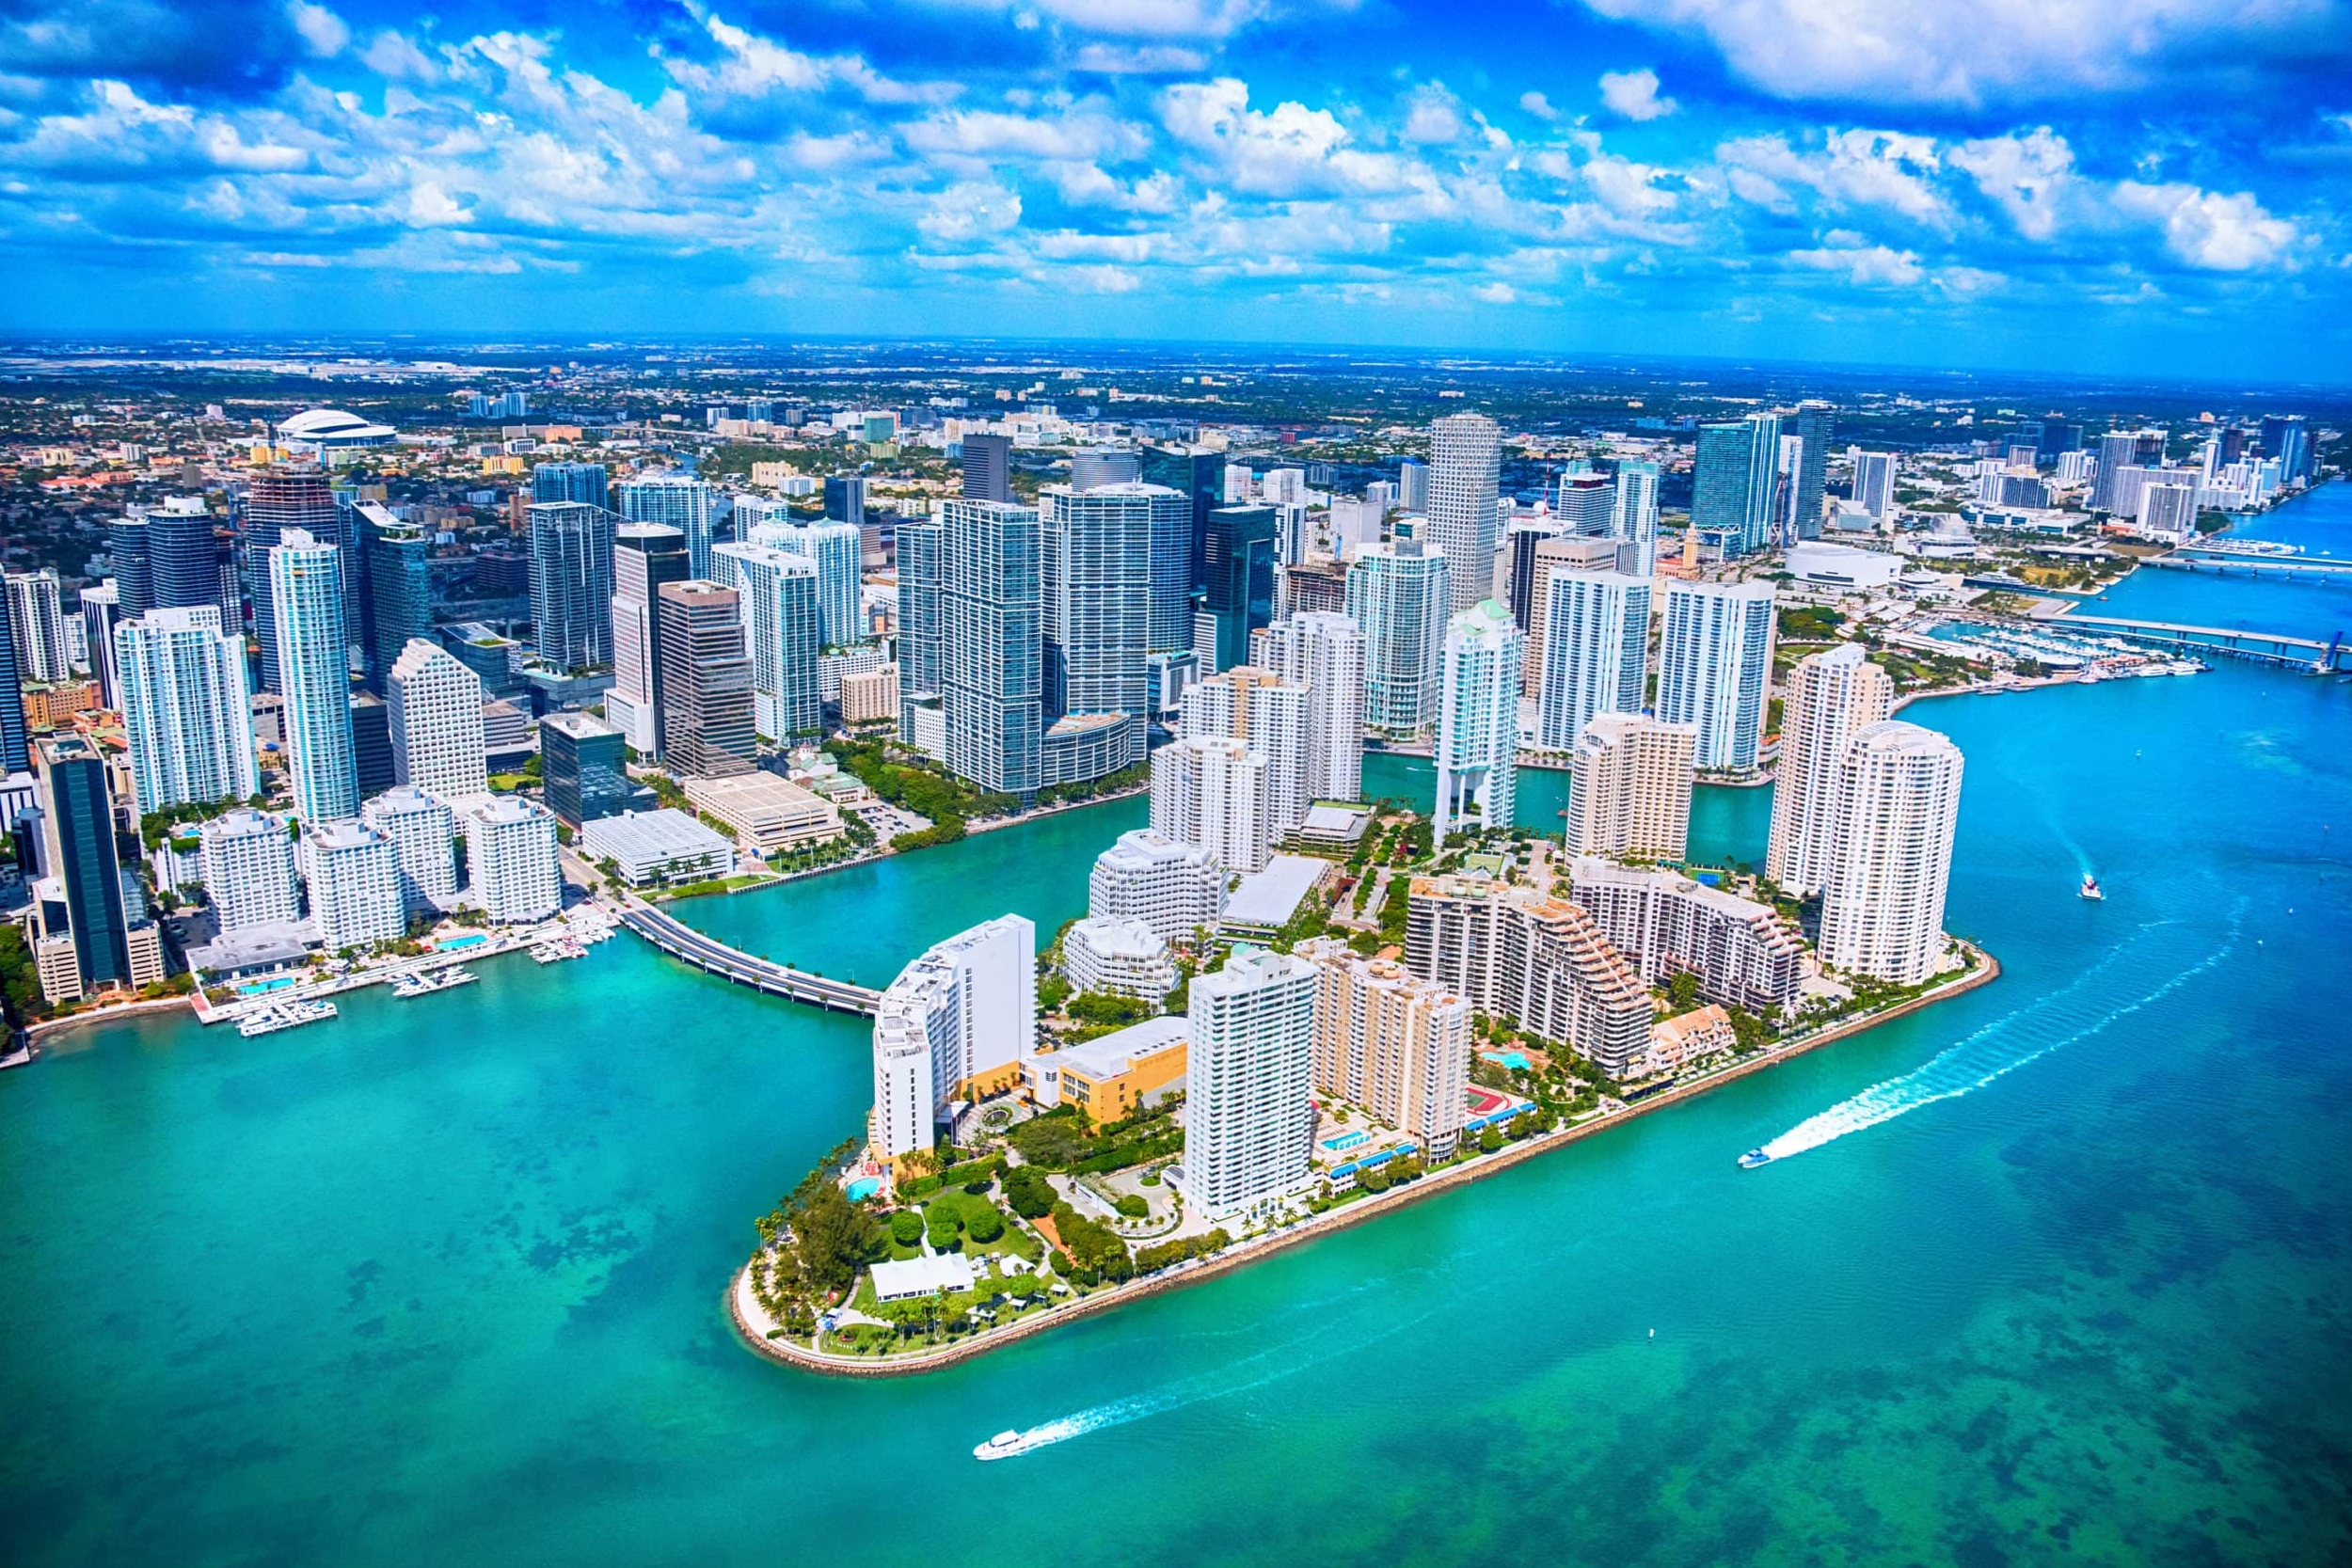 Miami - upcoming trip